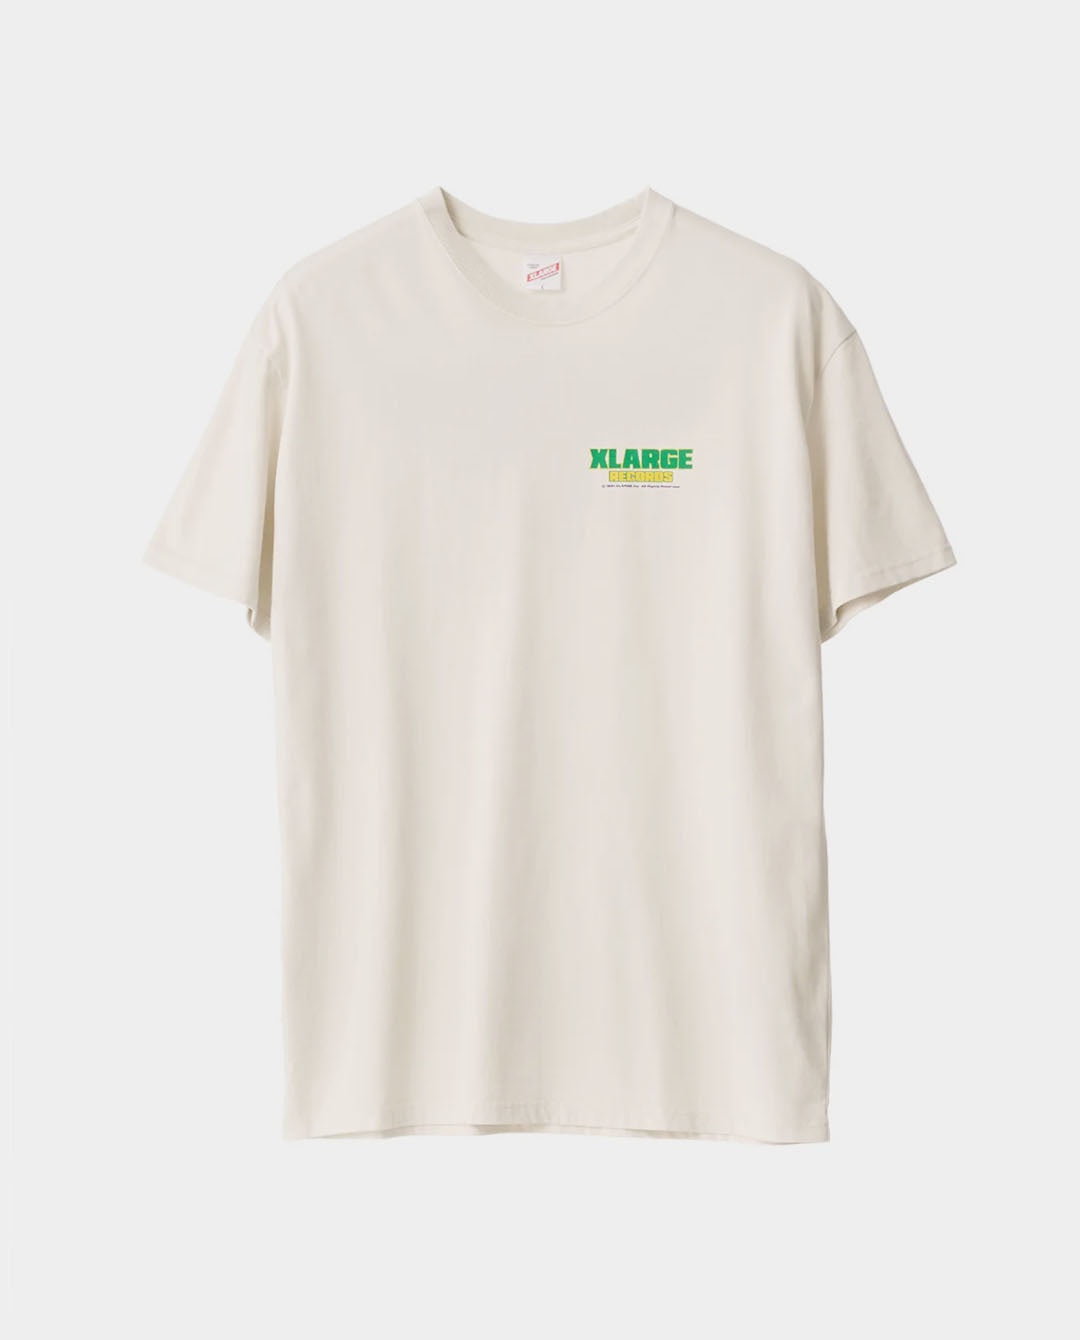 XLarge - Records T-Shirt - Pigment White